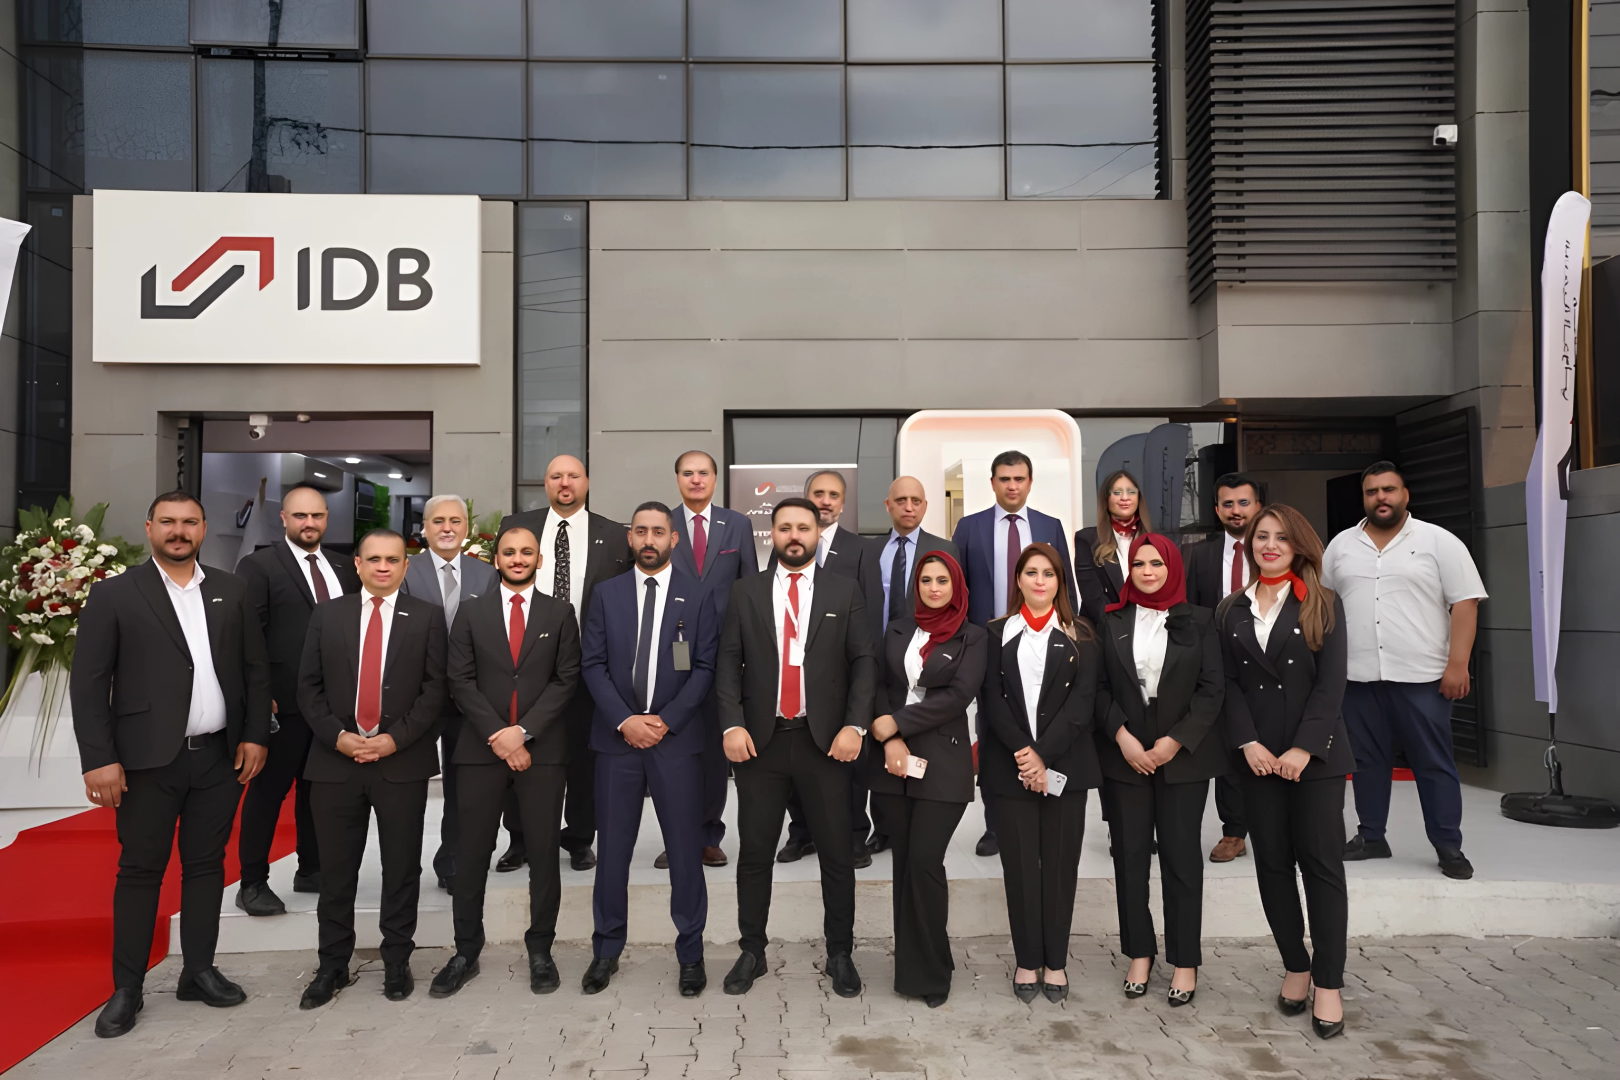 International Development Bank opens new branch in Erbil, expanding reach in Iraqi Kurdistan